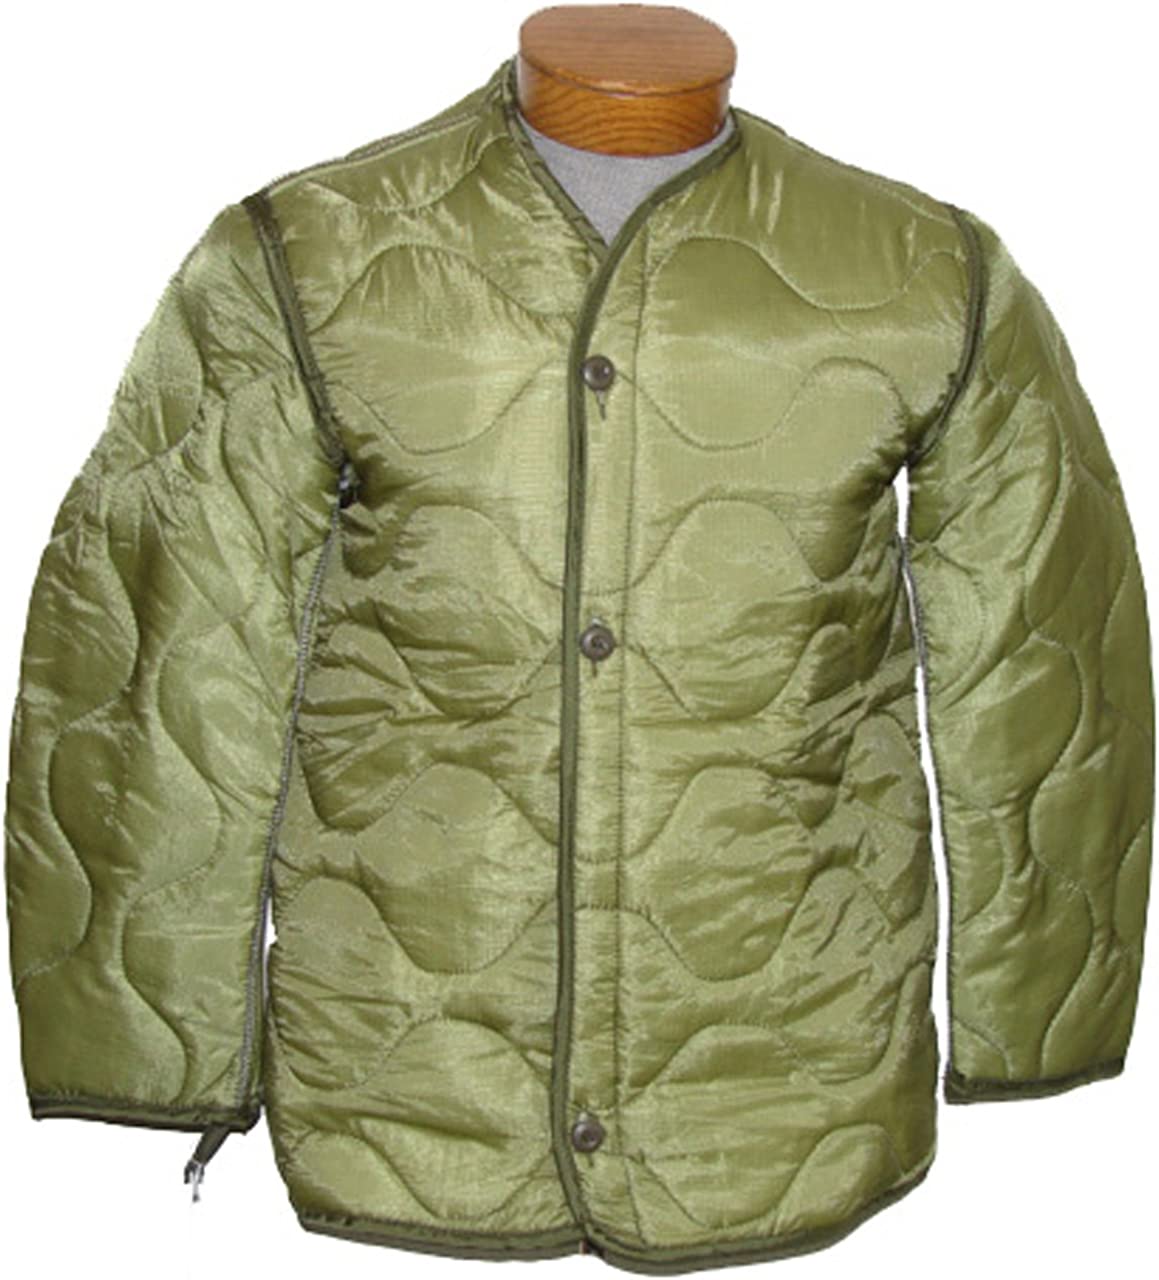 Jacket M65 WholeSale - Price List, Bulk Buy at